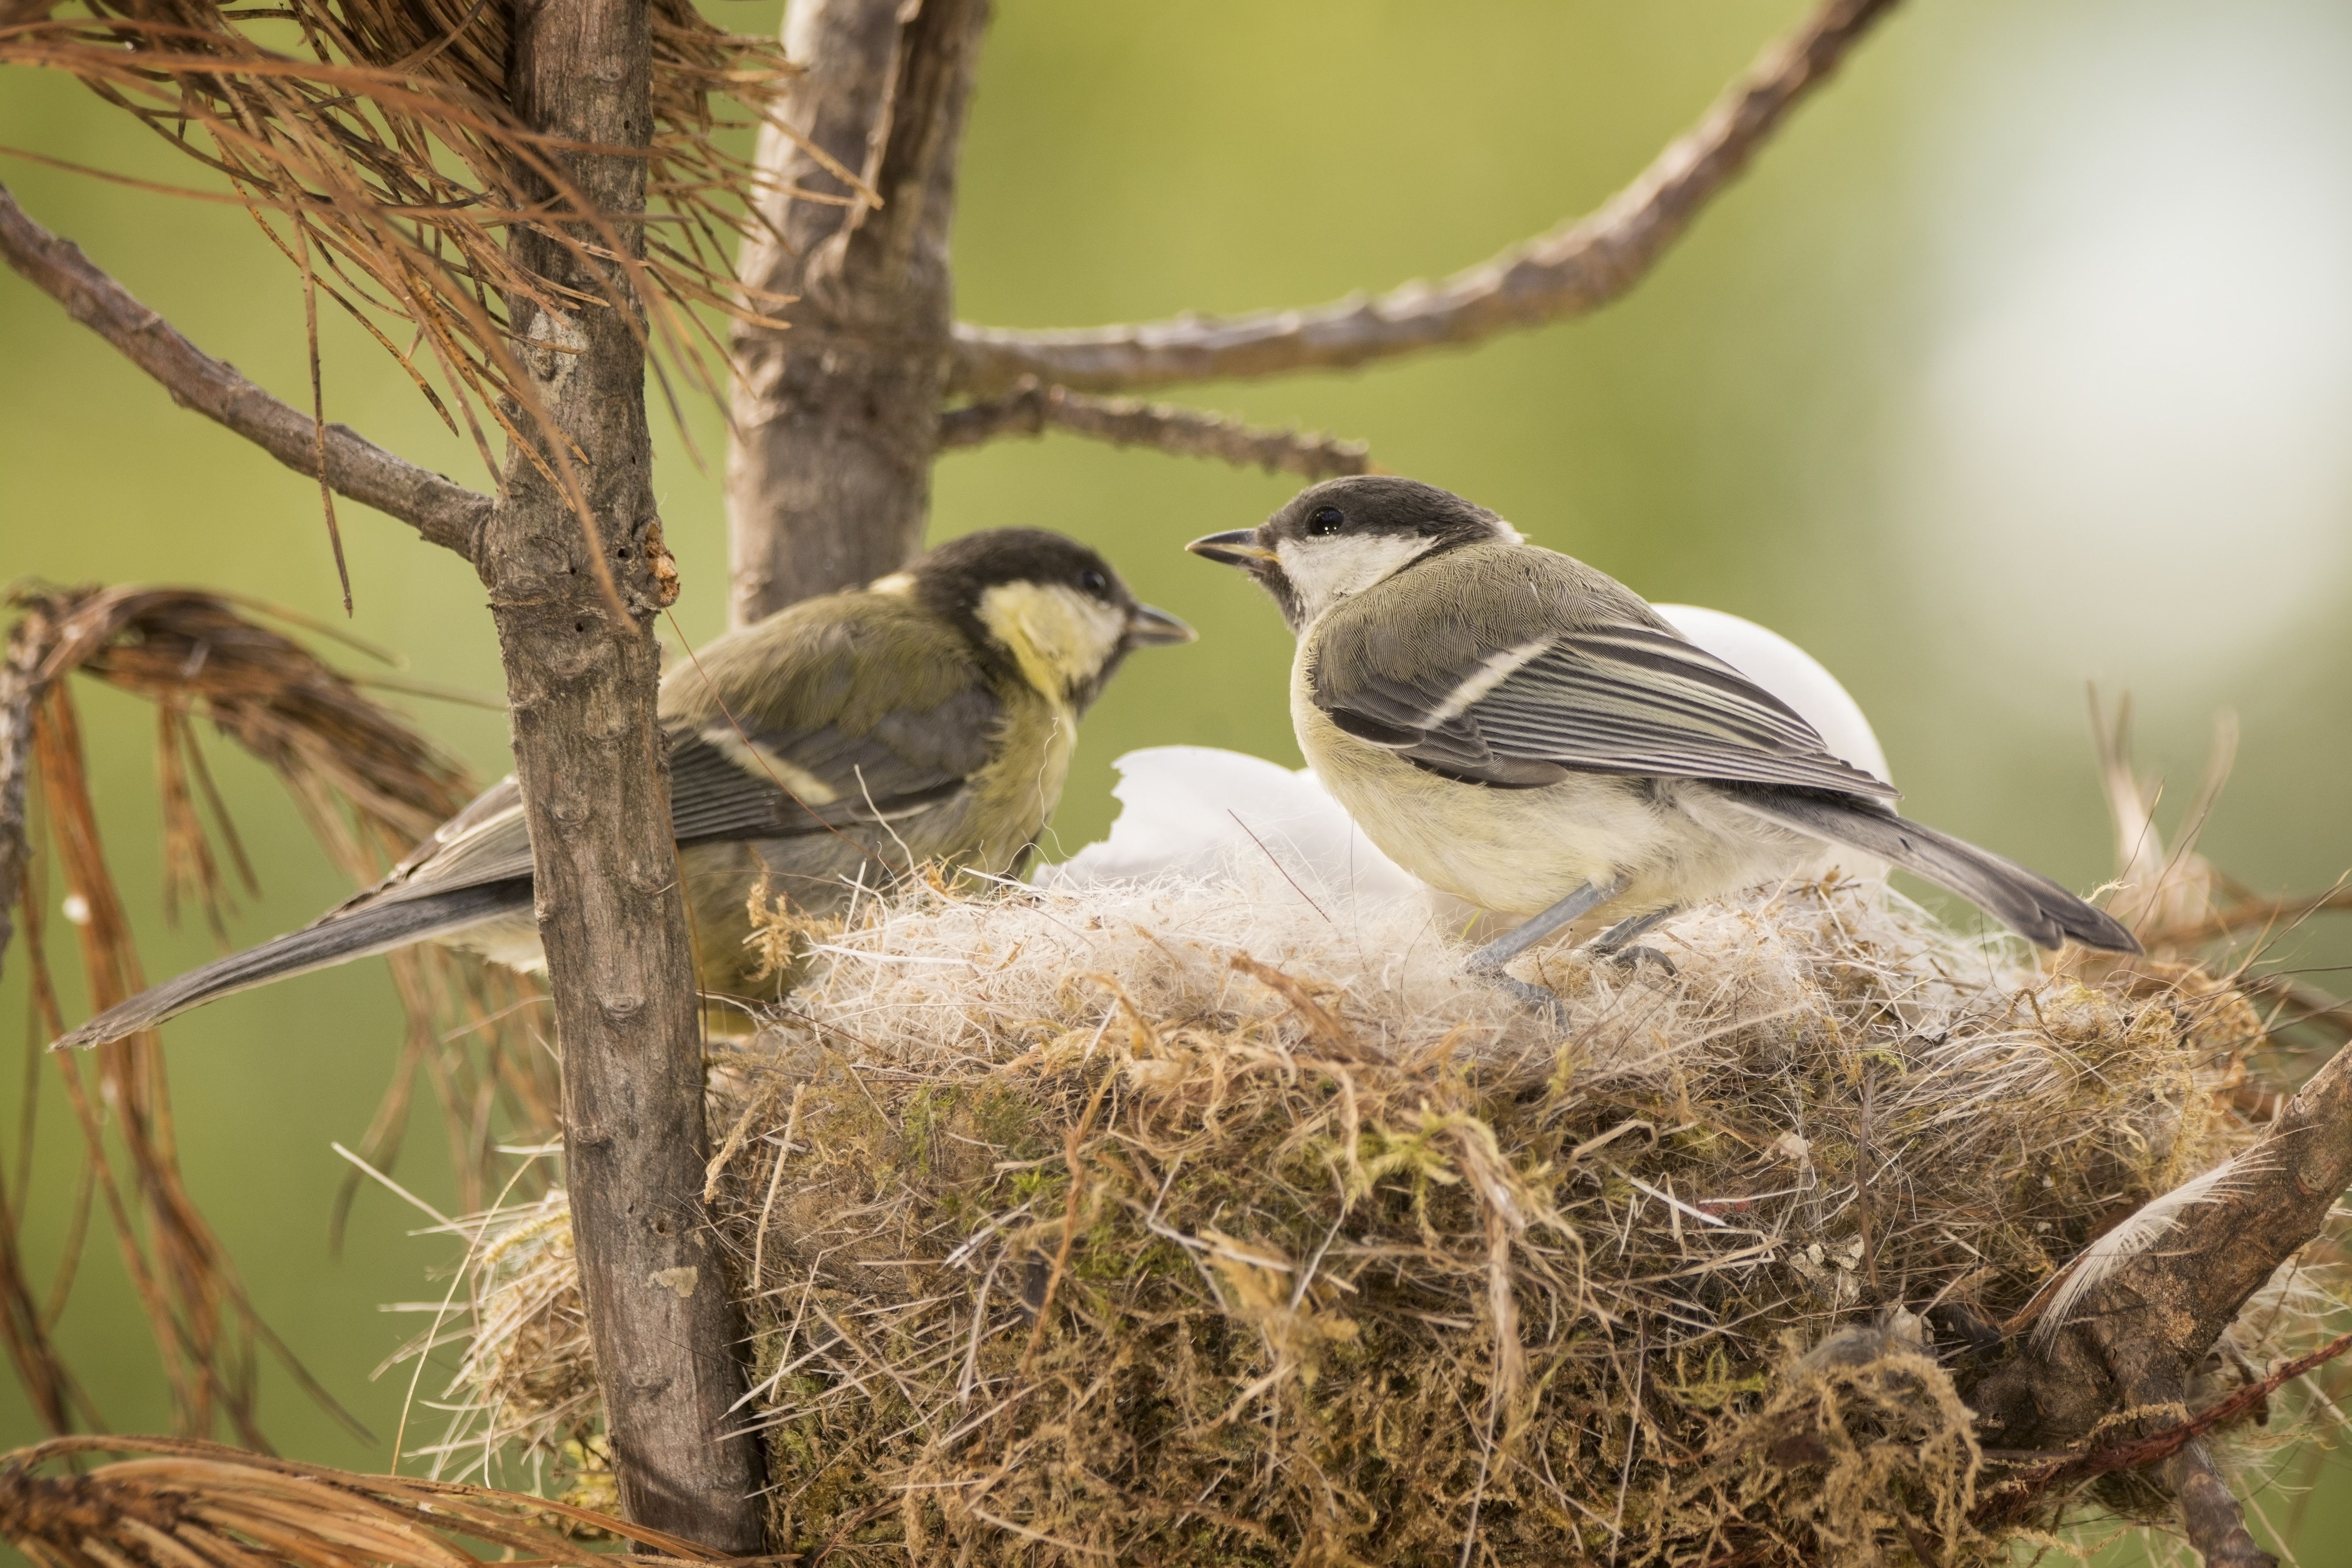 Detail Images Of Bird Nests Nomer 8